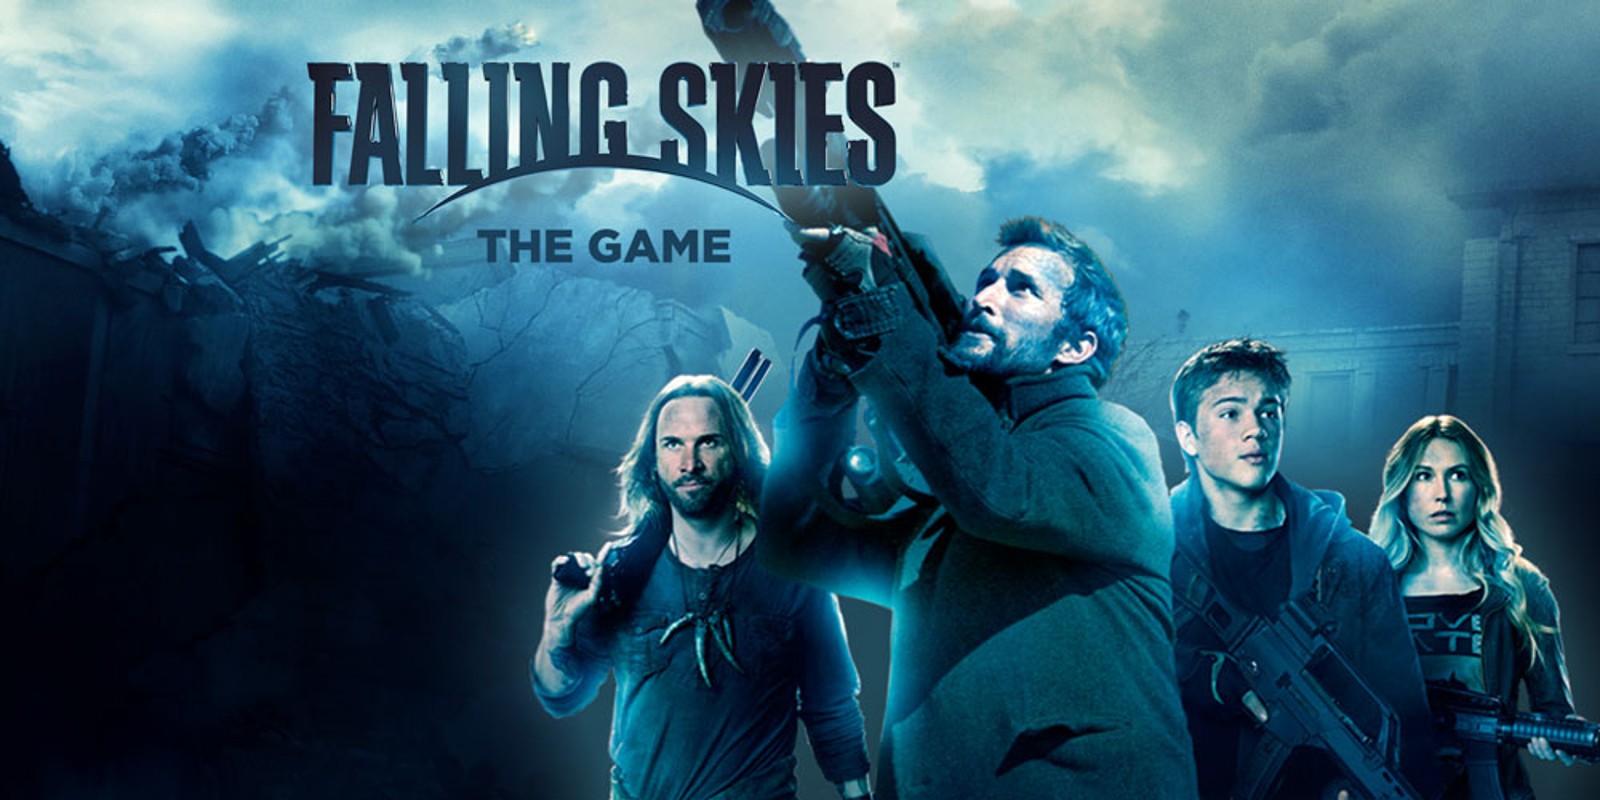 Falling Skies: The Game | Wii U download software | Games | Nintendo1600 x 800